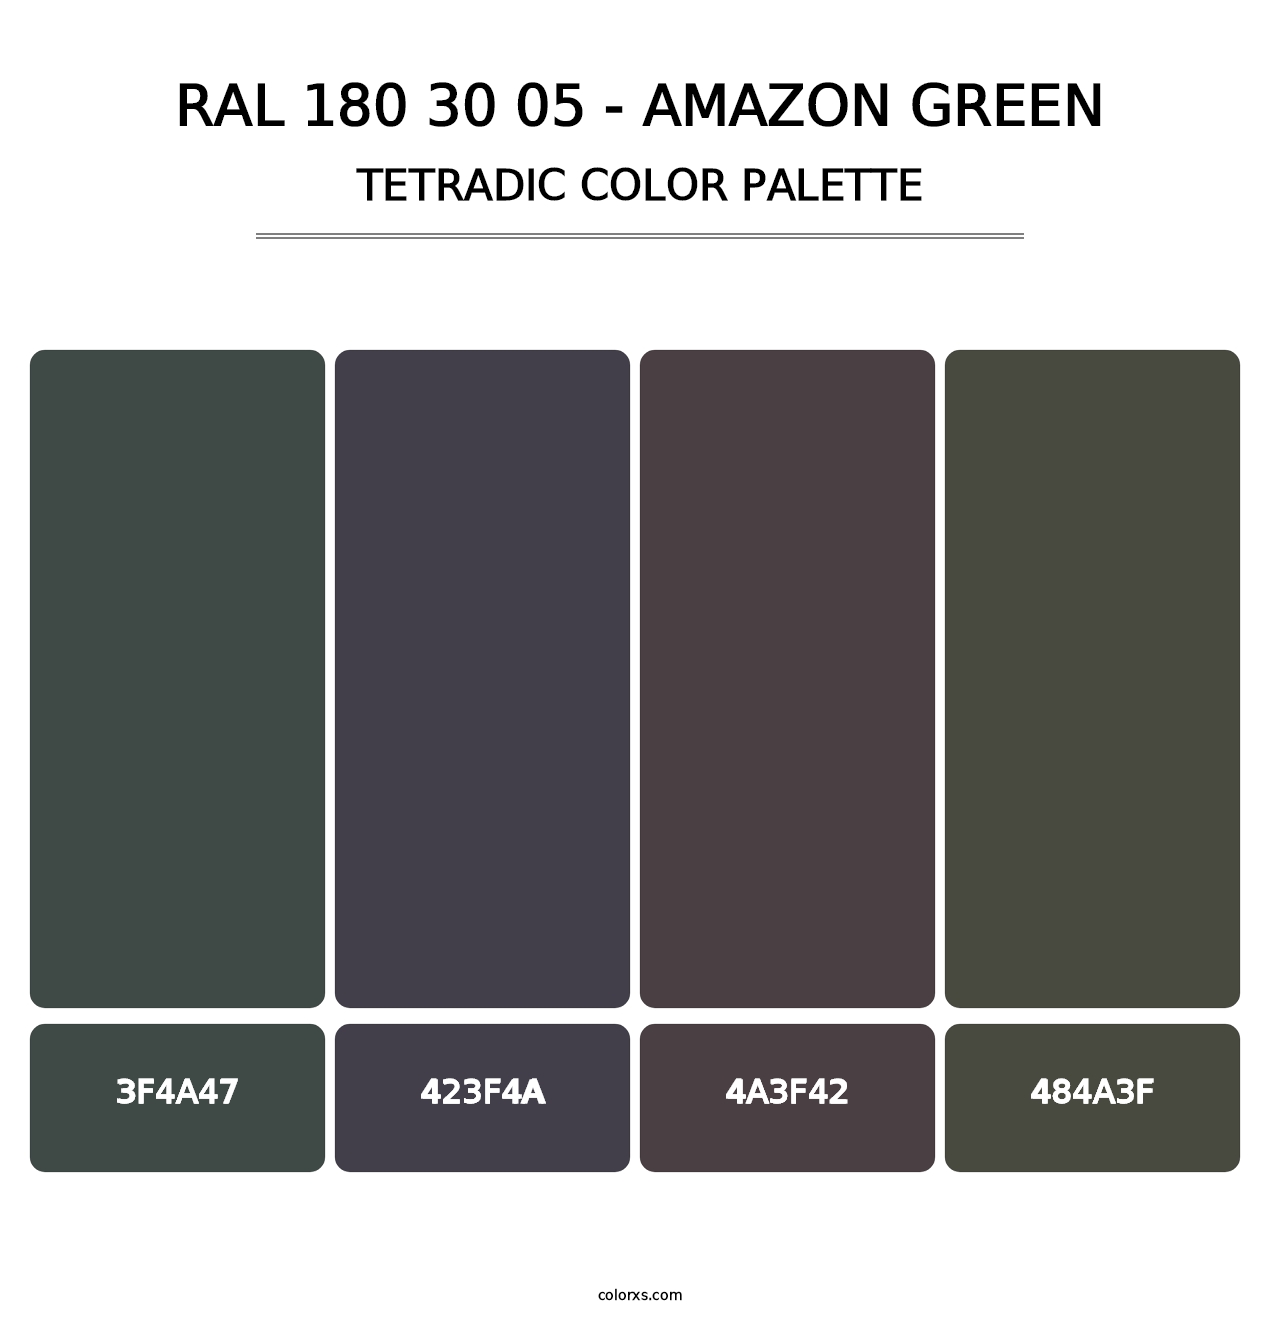 RAL 180 30 05 - Amazon Green - Tetradic Color Palette